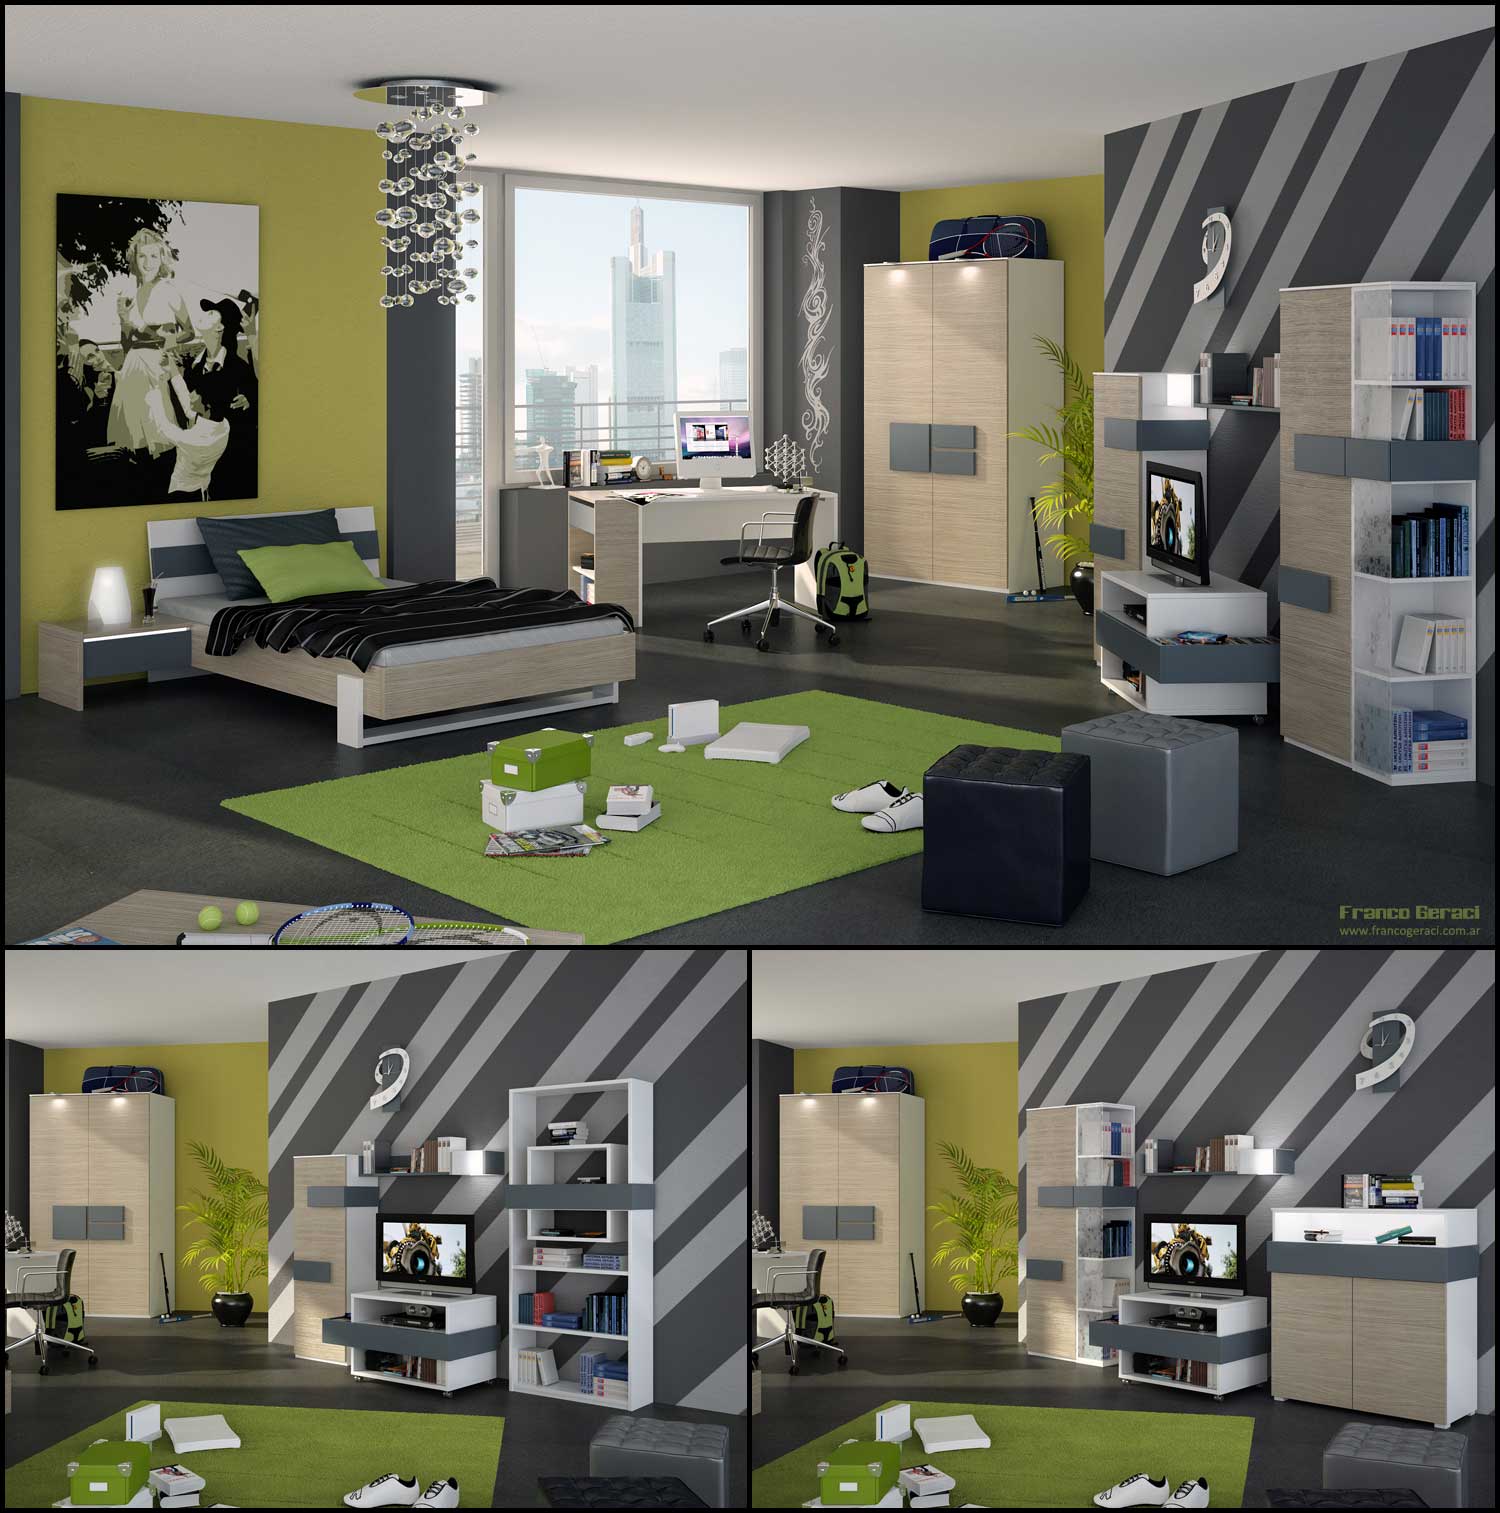 Modern and Cool Bedroom Designs for Boys & Girls - Bedroom ...